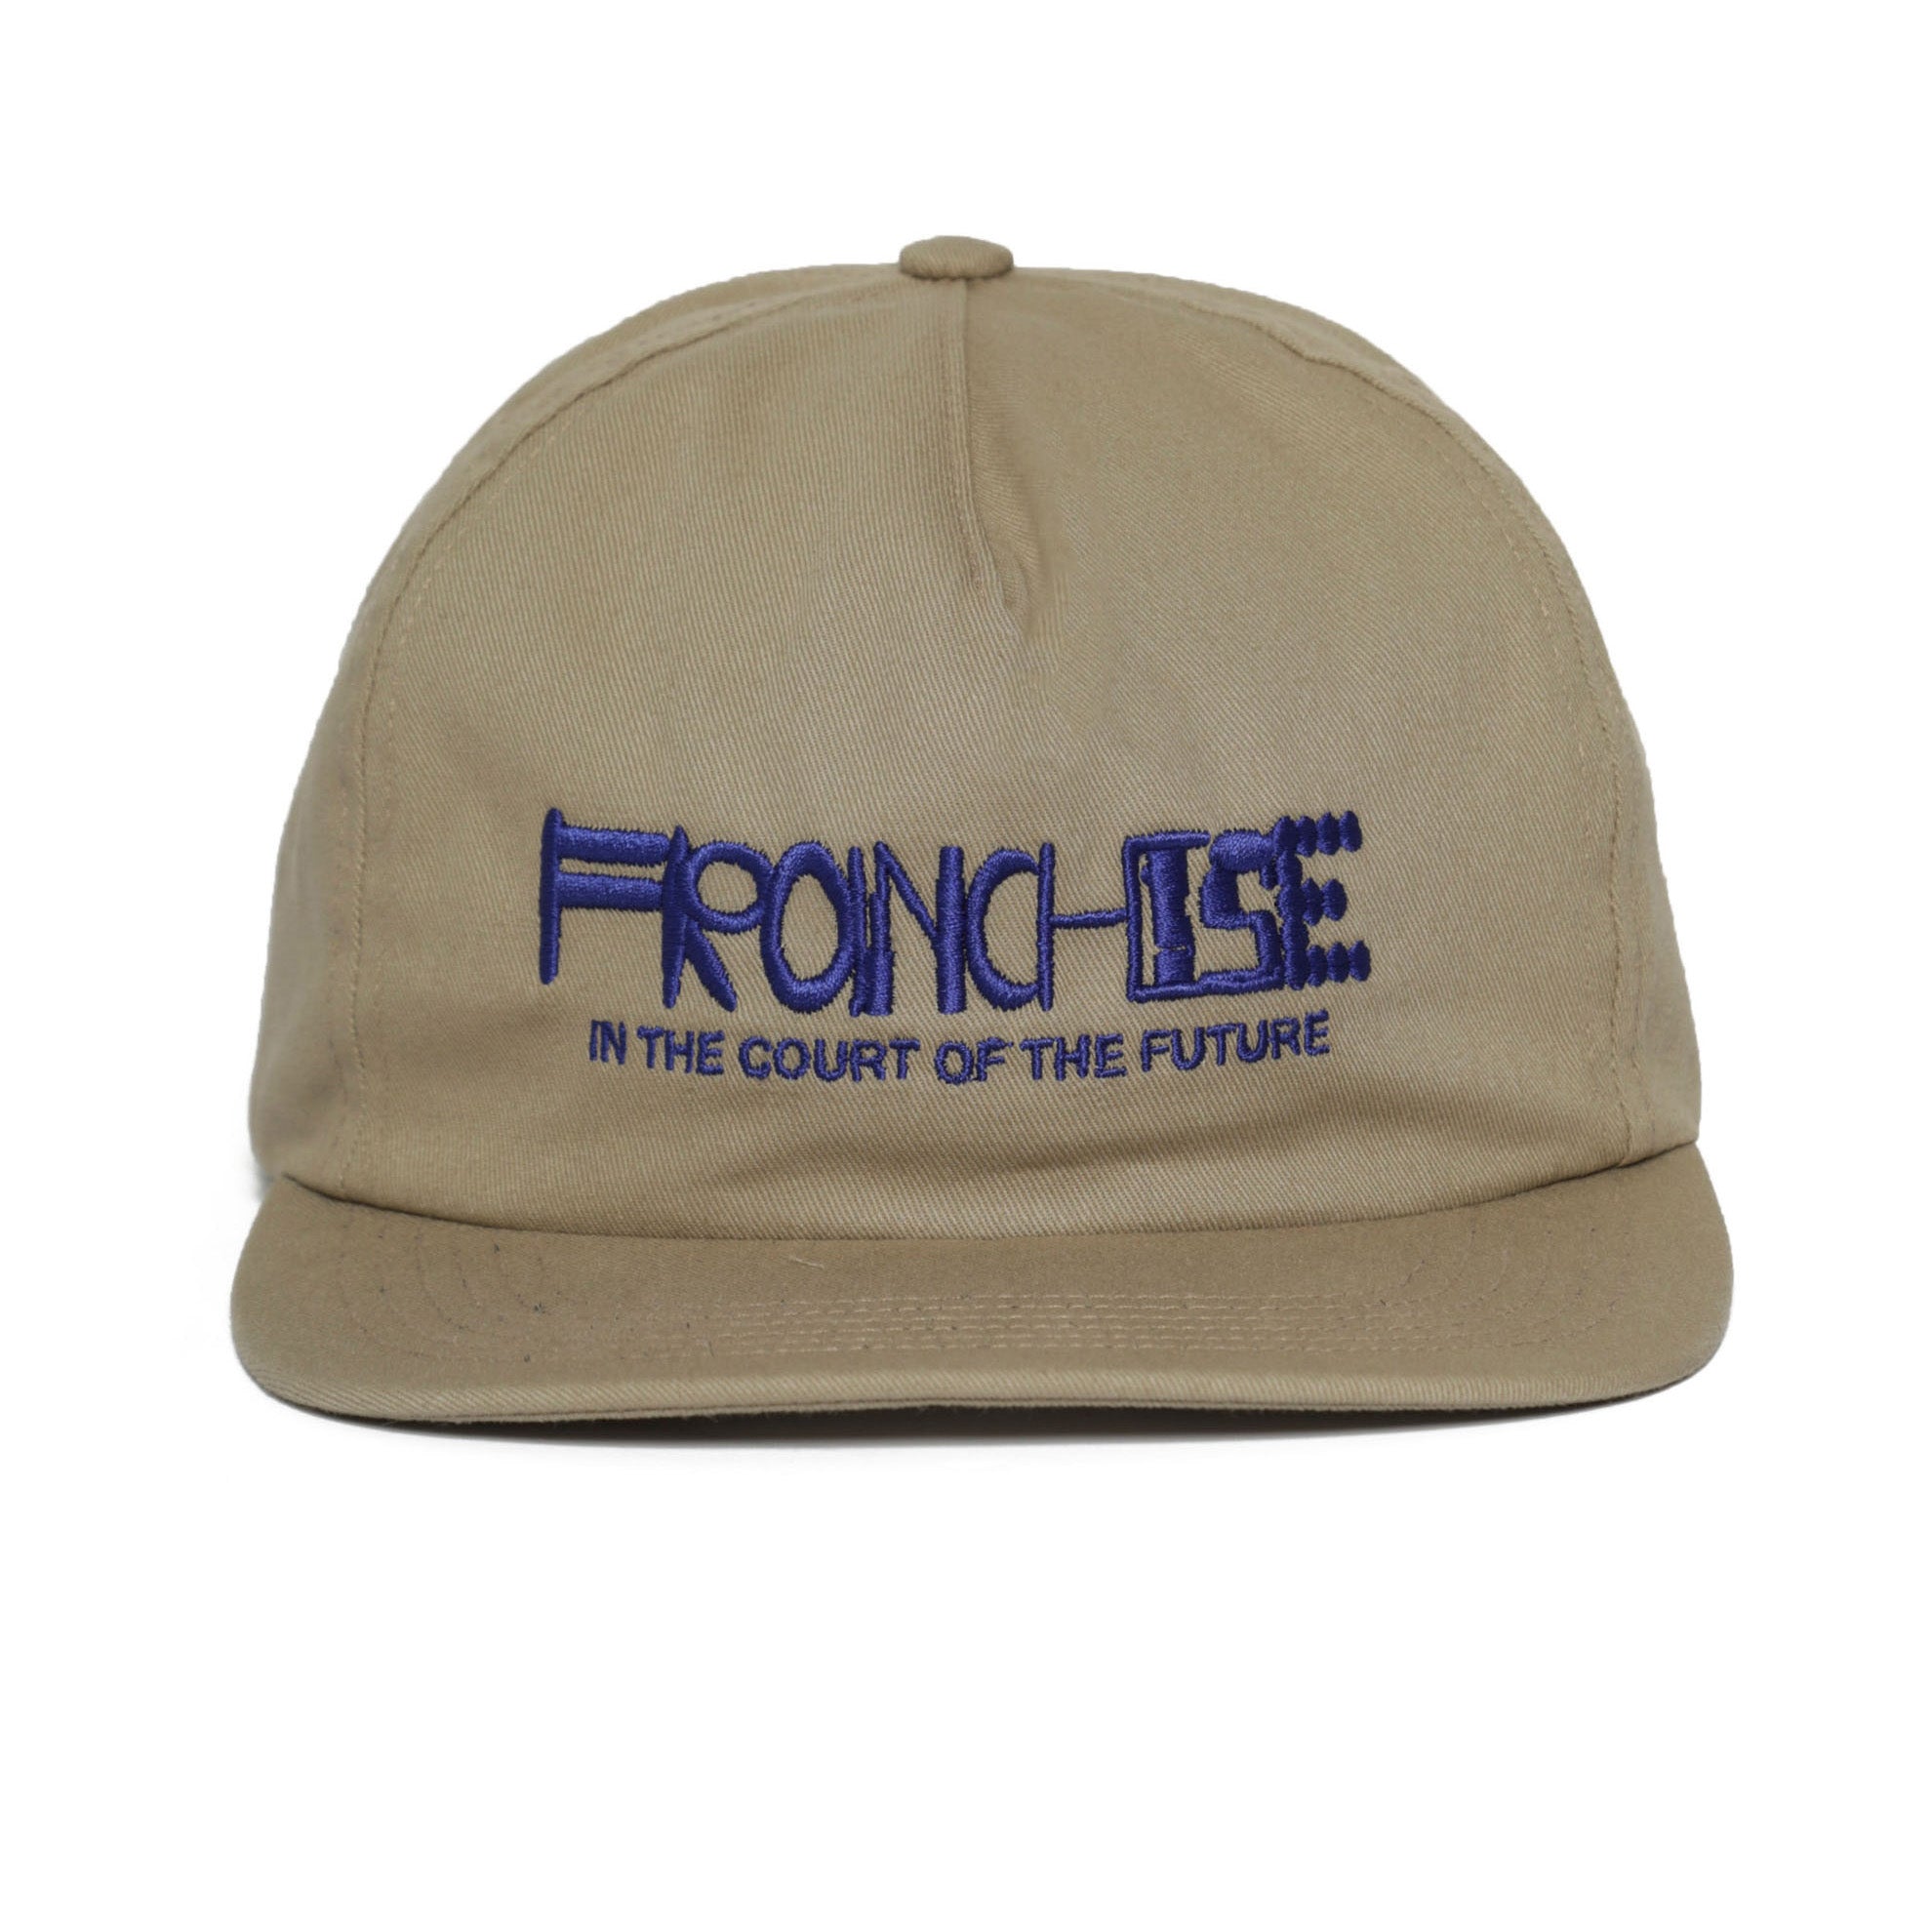 FRANCHISE - Cotf 5 Panel Hat - (Khaki) view 1